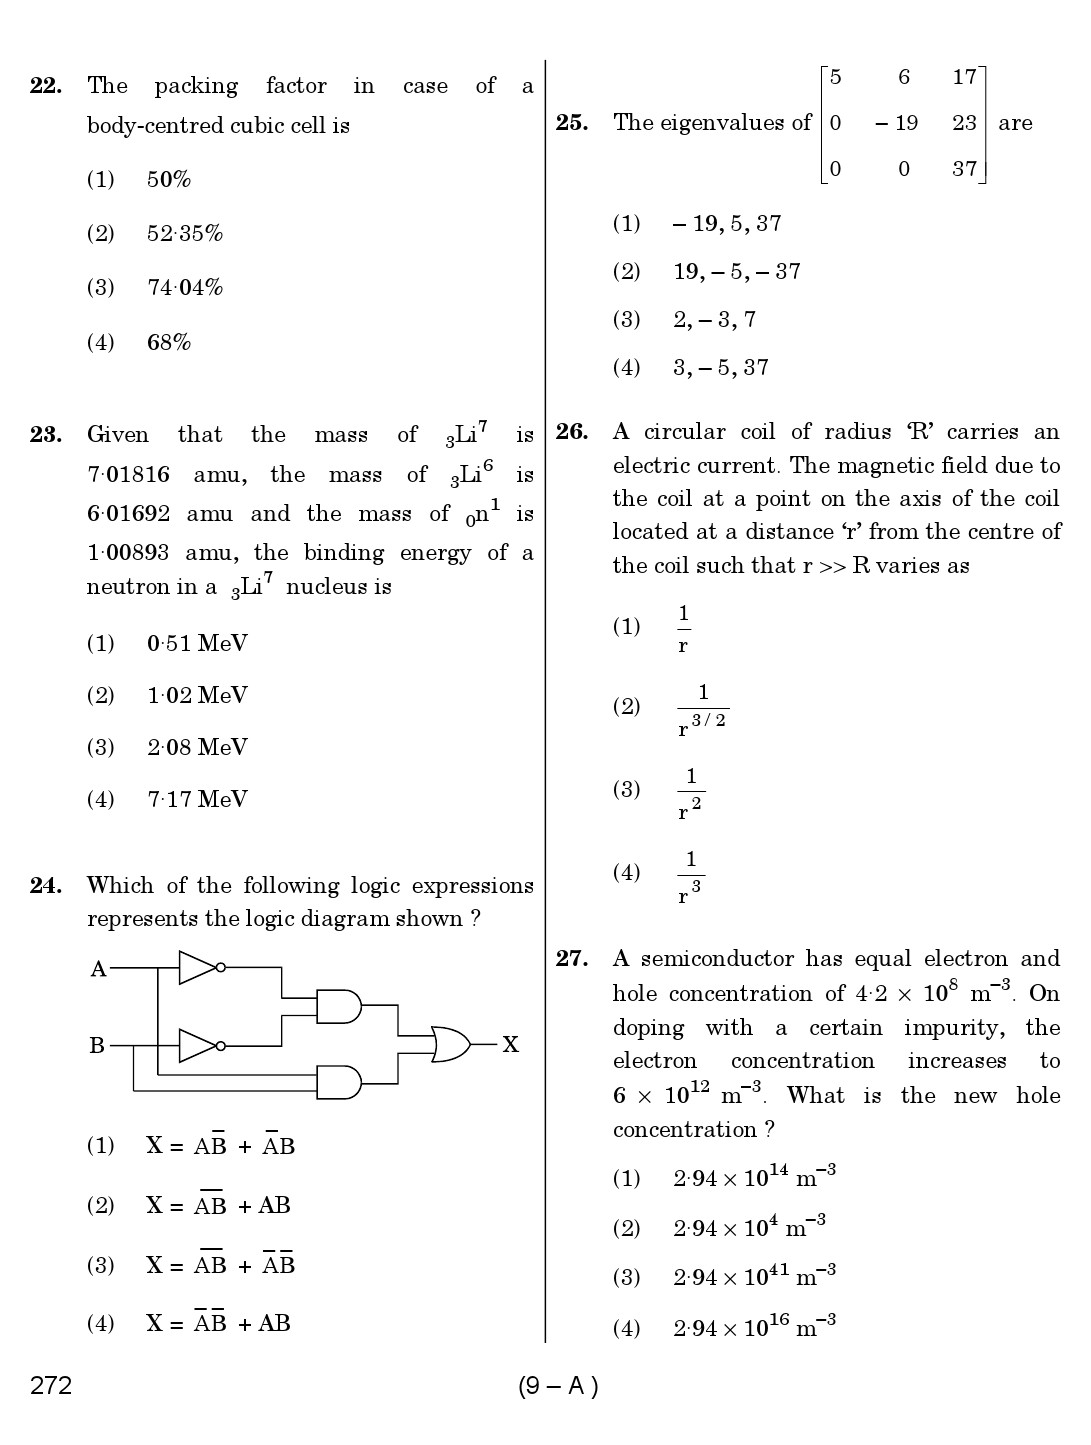 Karnataka PSC Mathematics Teacher Exam Sample Question Paper Subject code 272 9